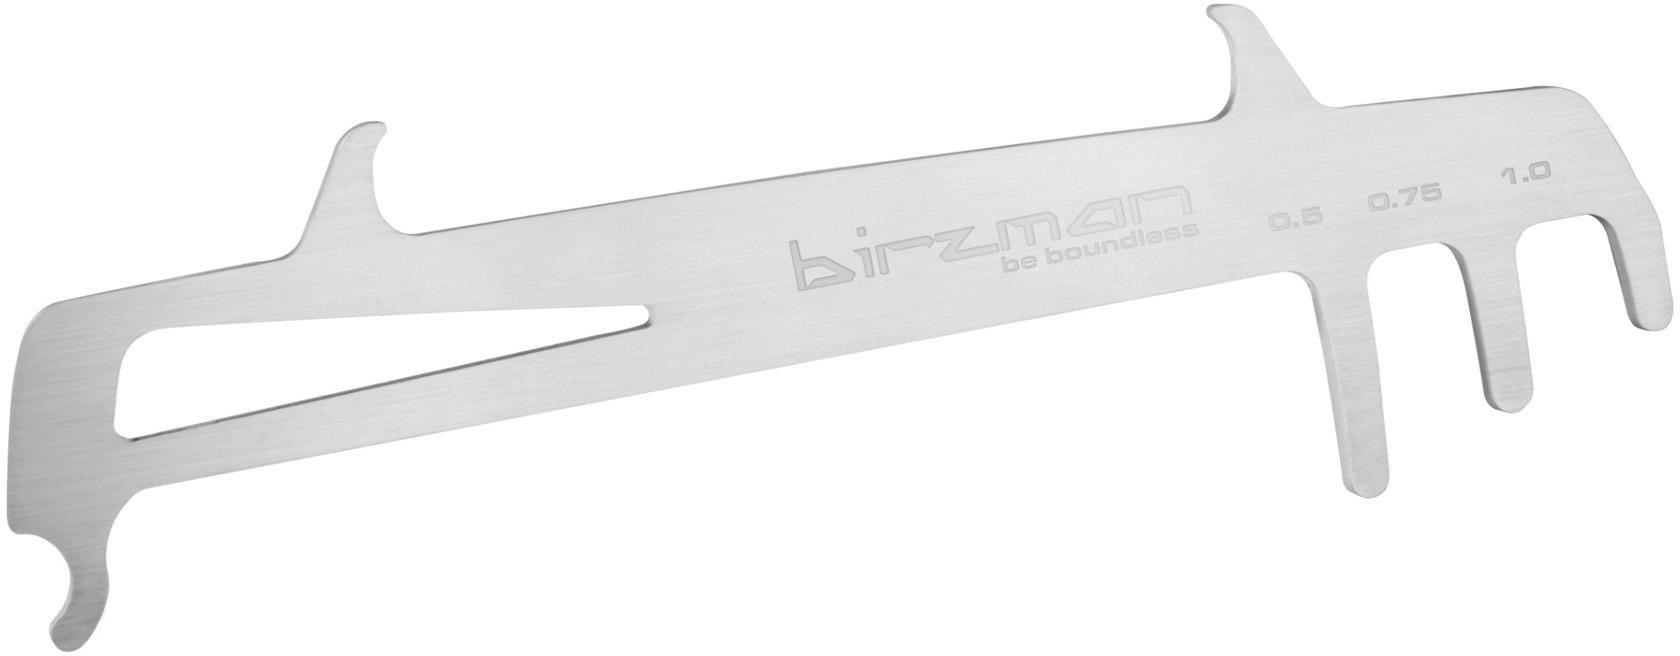 Birzman Chain Wear Indicator - Silver